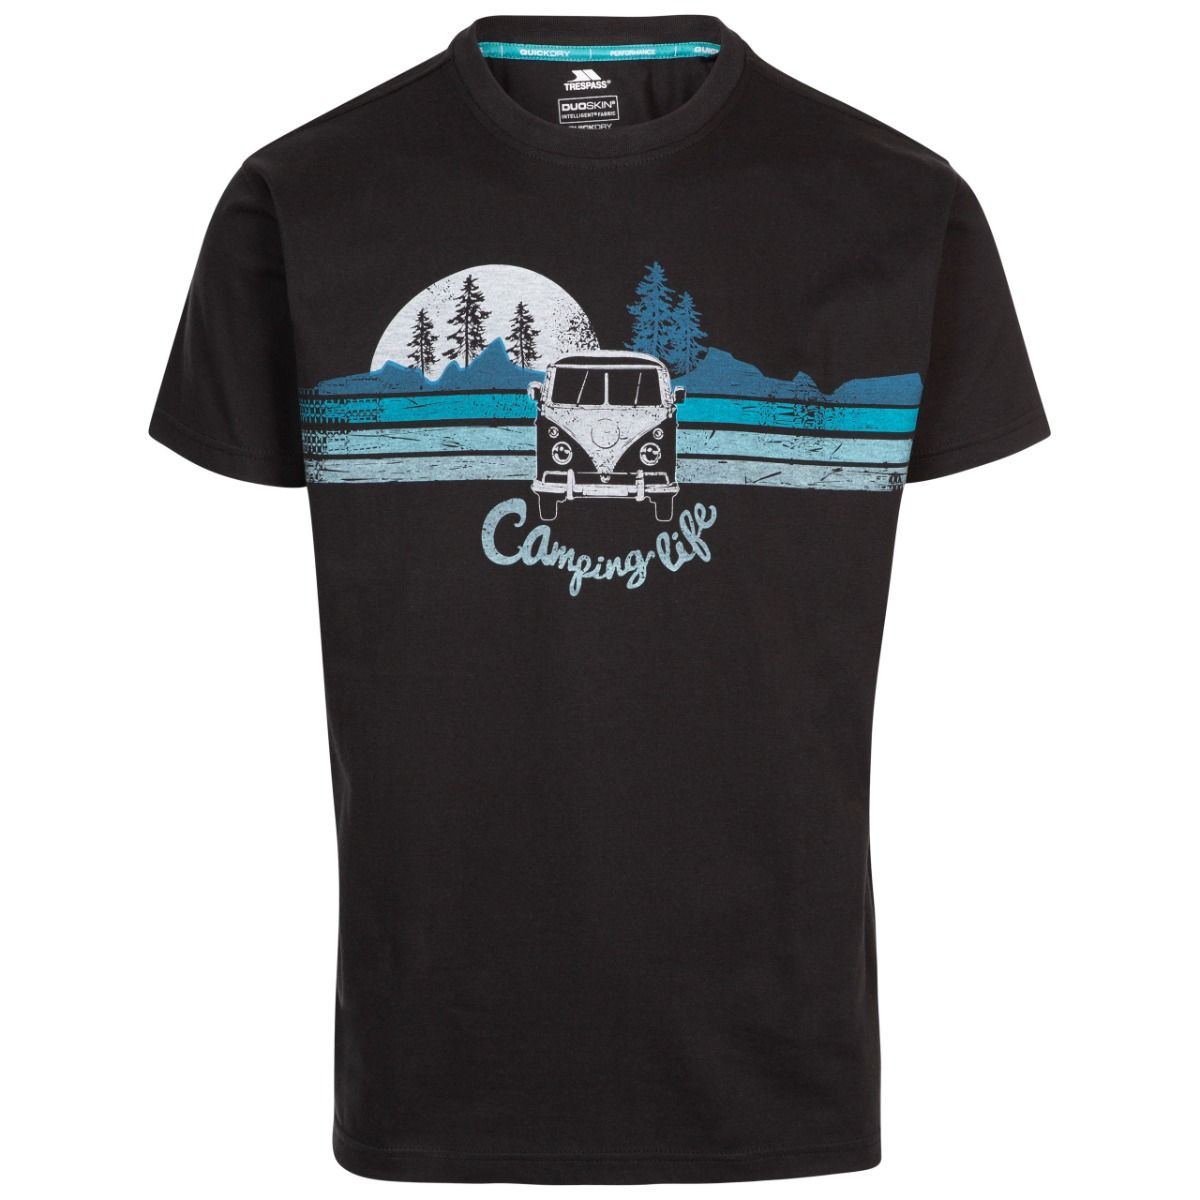 Trespass Mens Casual Short Sleeve Graphic Camping Life T-shirt Cromer